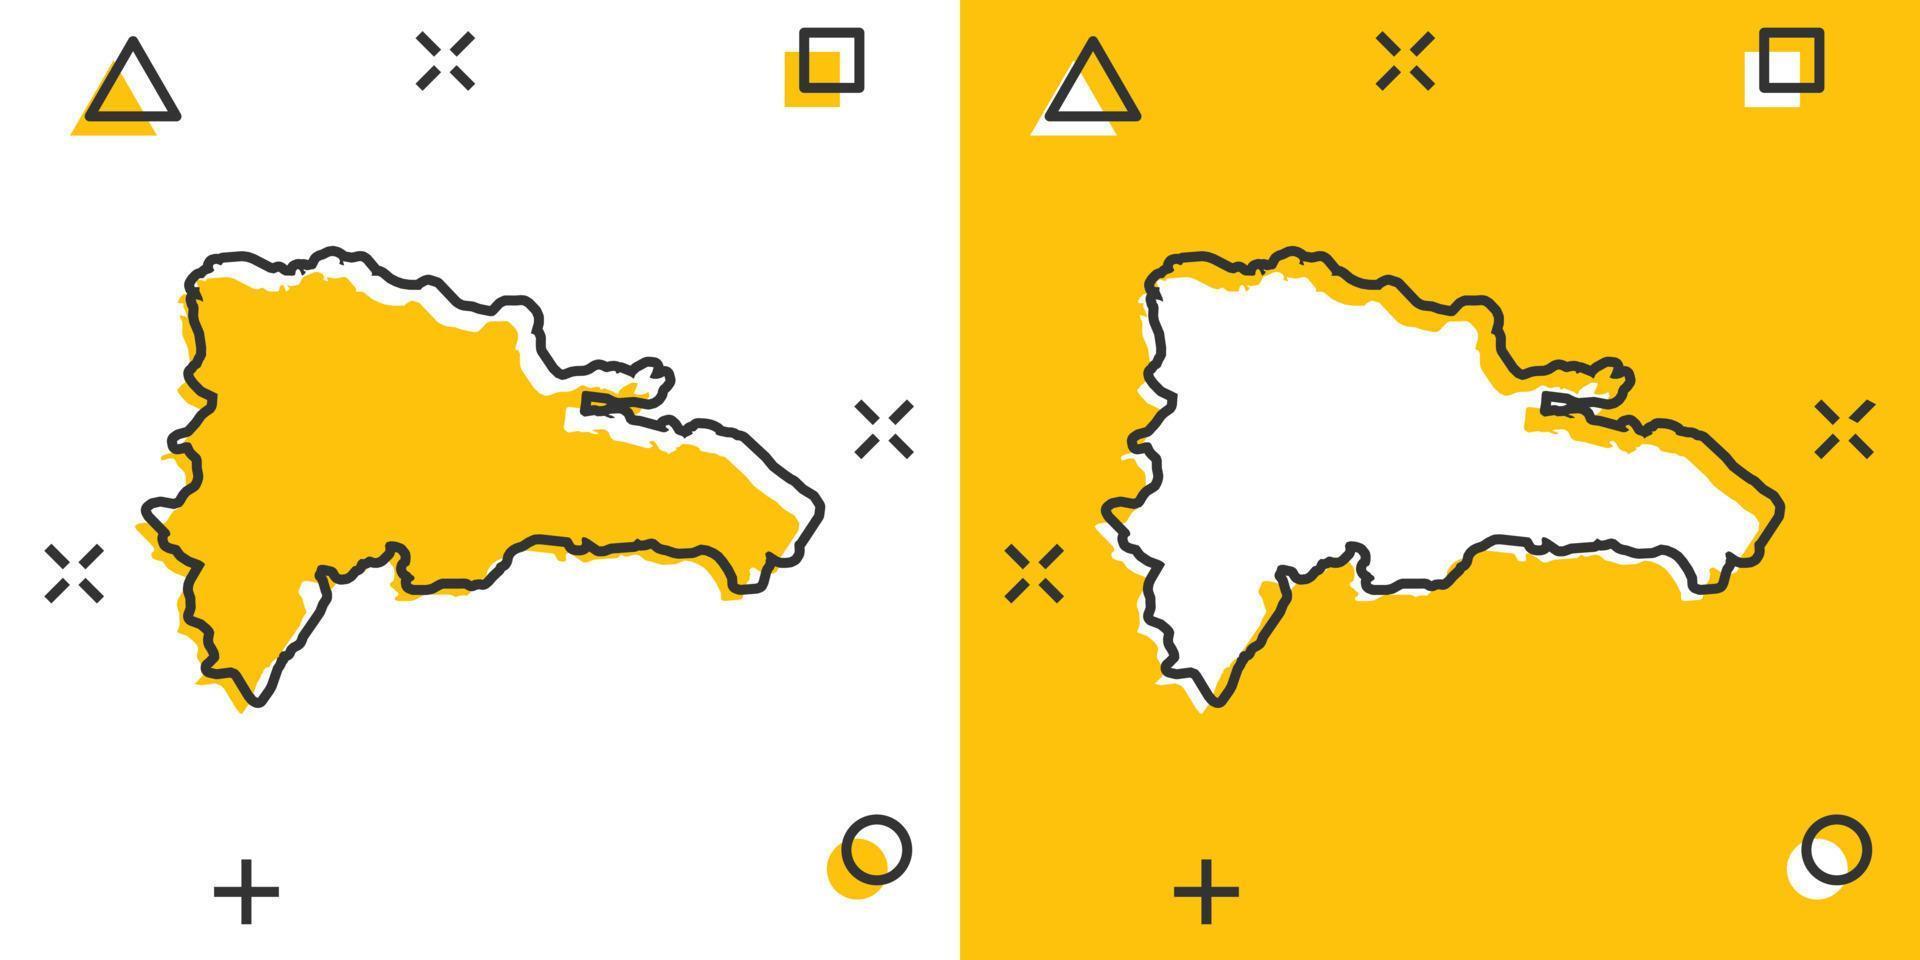 Vektor Cartoon Dominikanische Republik Kartensymbol im Comic-Stil. dominikanische republik zeichen illustration piktogramm. Kartografie-Karten-Business-Splash-Effekt-Konzept.